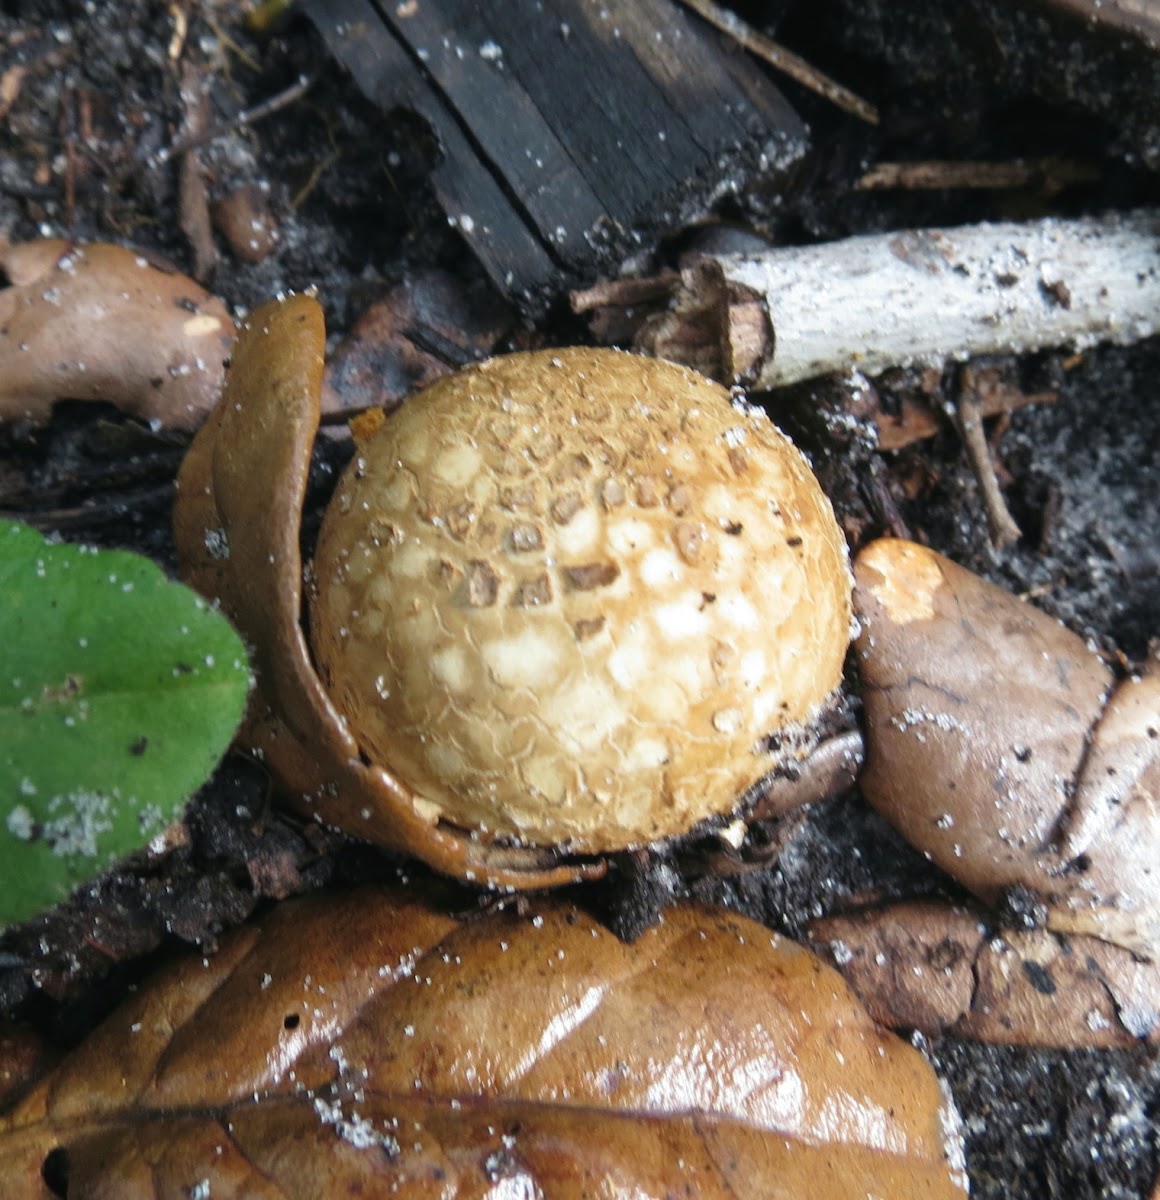 Umber puffball fungus